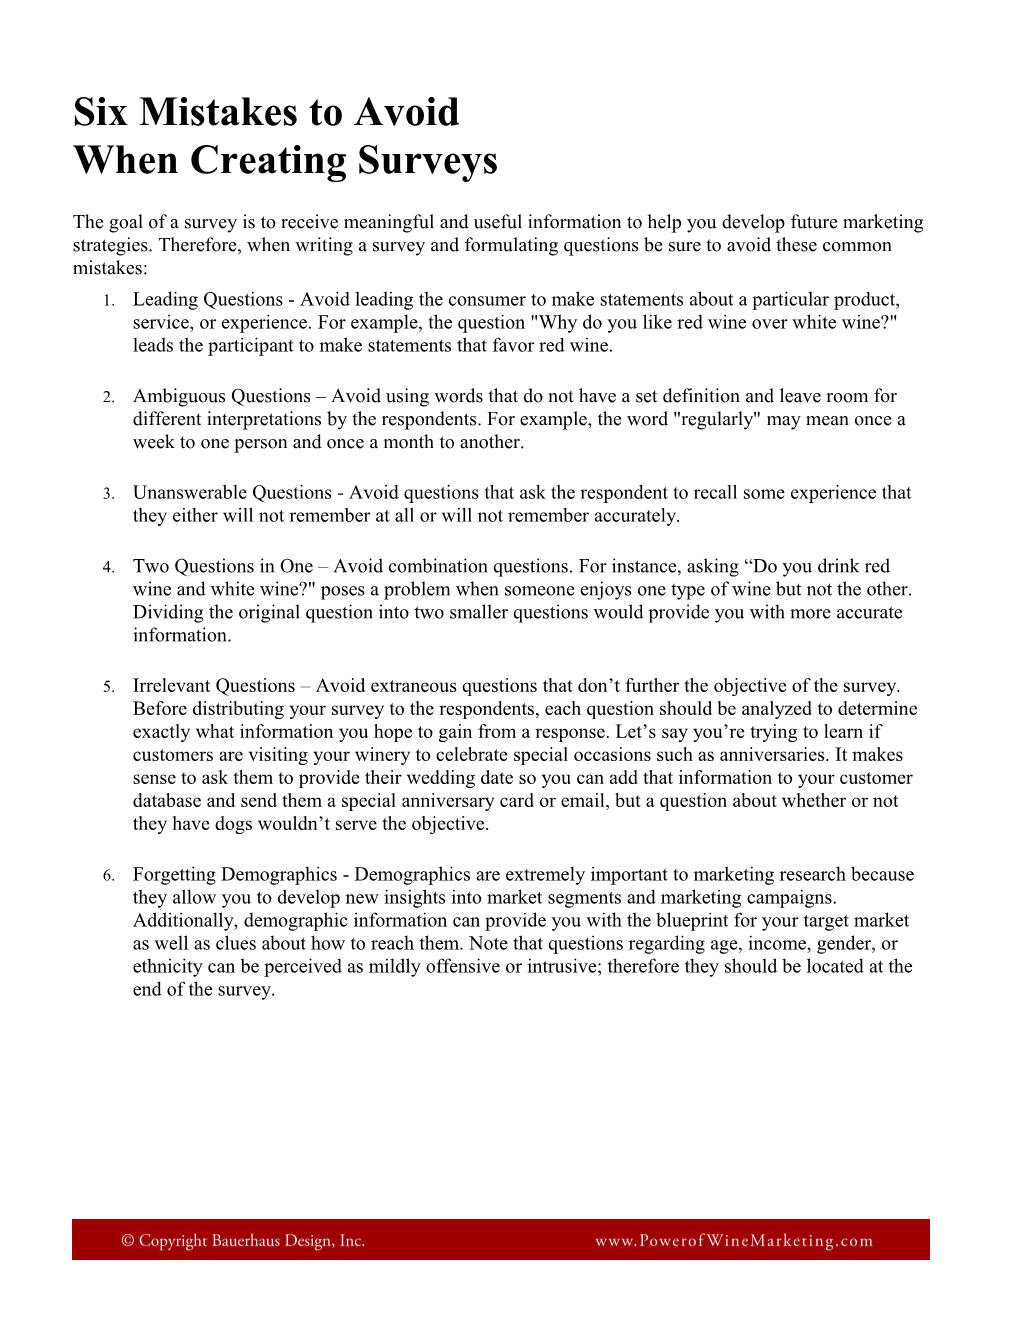 Six Mistakes to Avoid When Creating Surveys